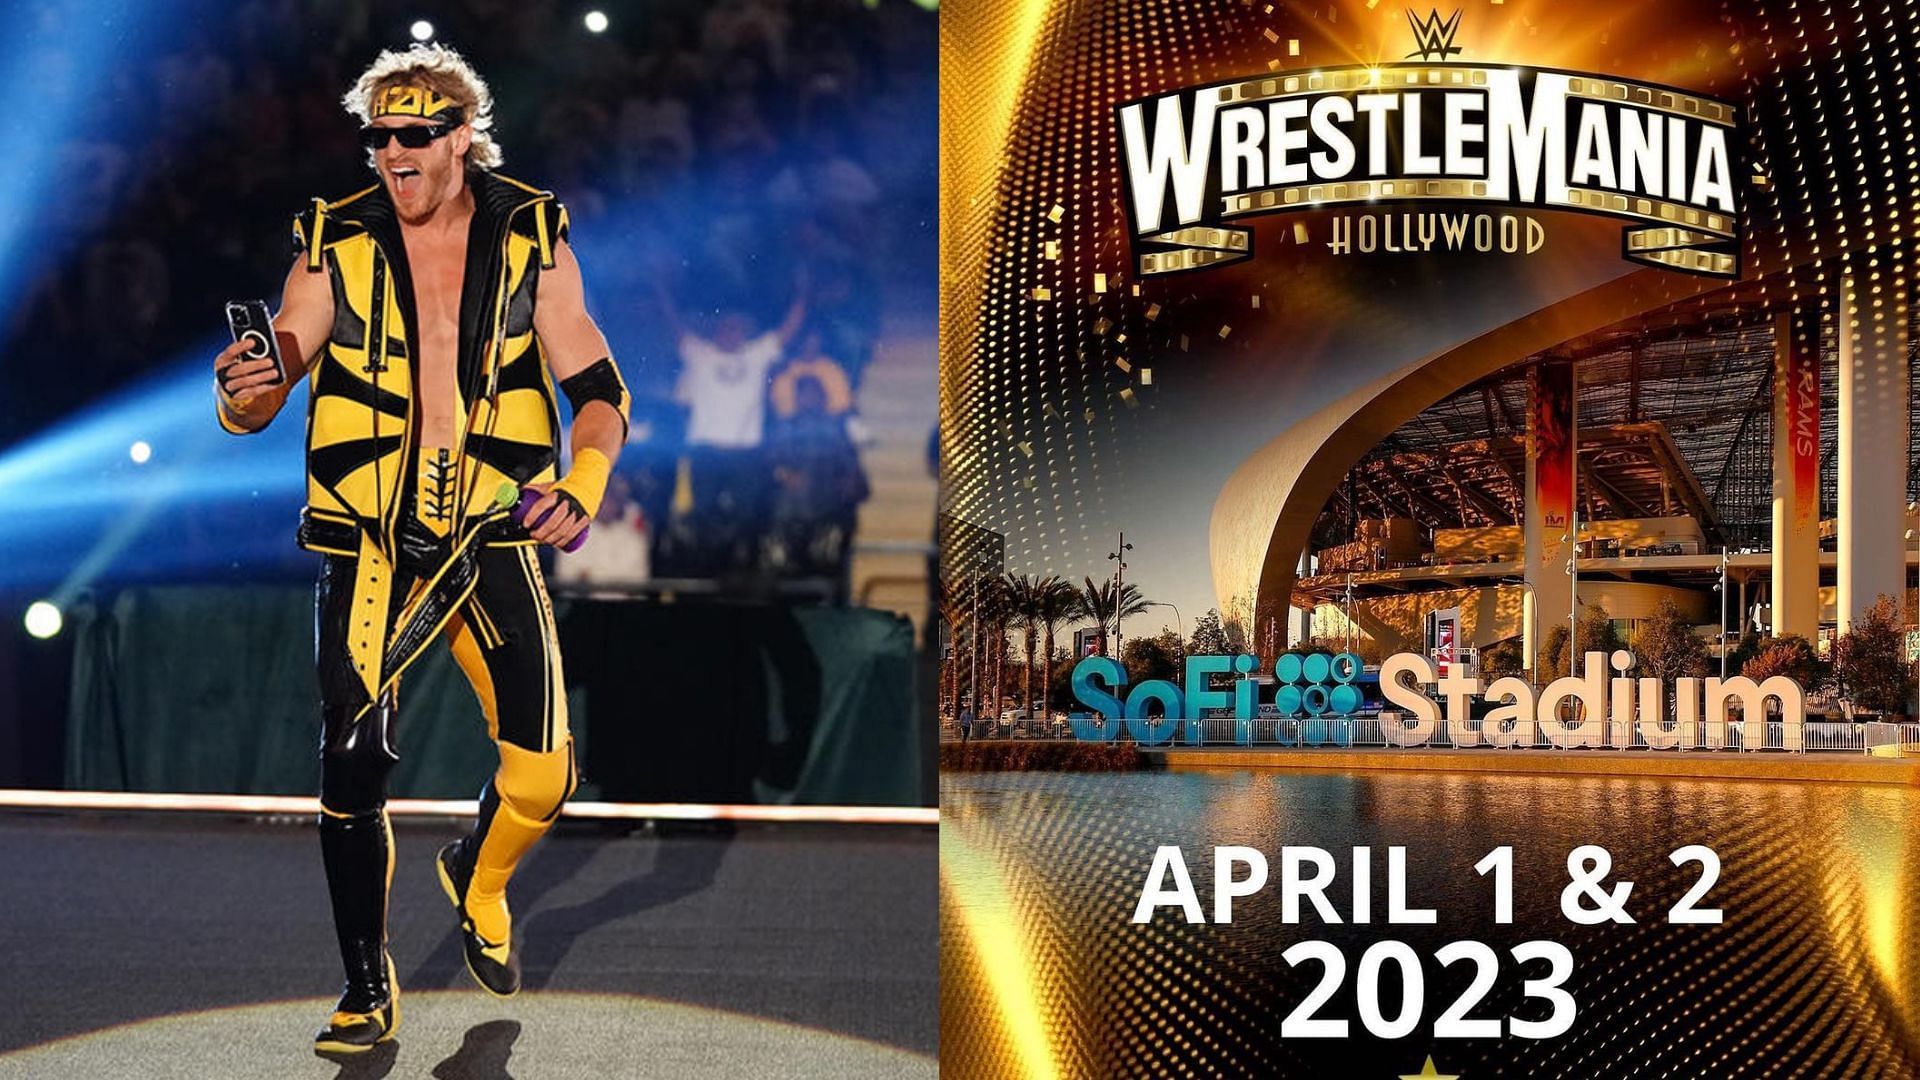 YouTube Sensation Logan Paul is already eyeing a match for WrestleMania 39